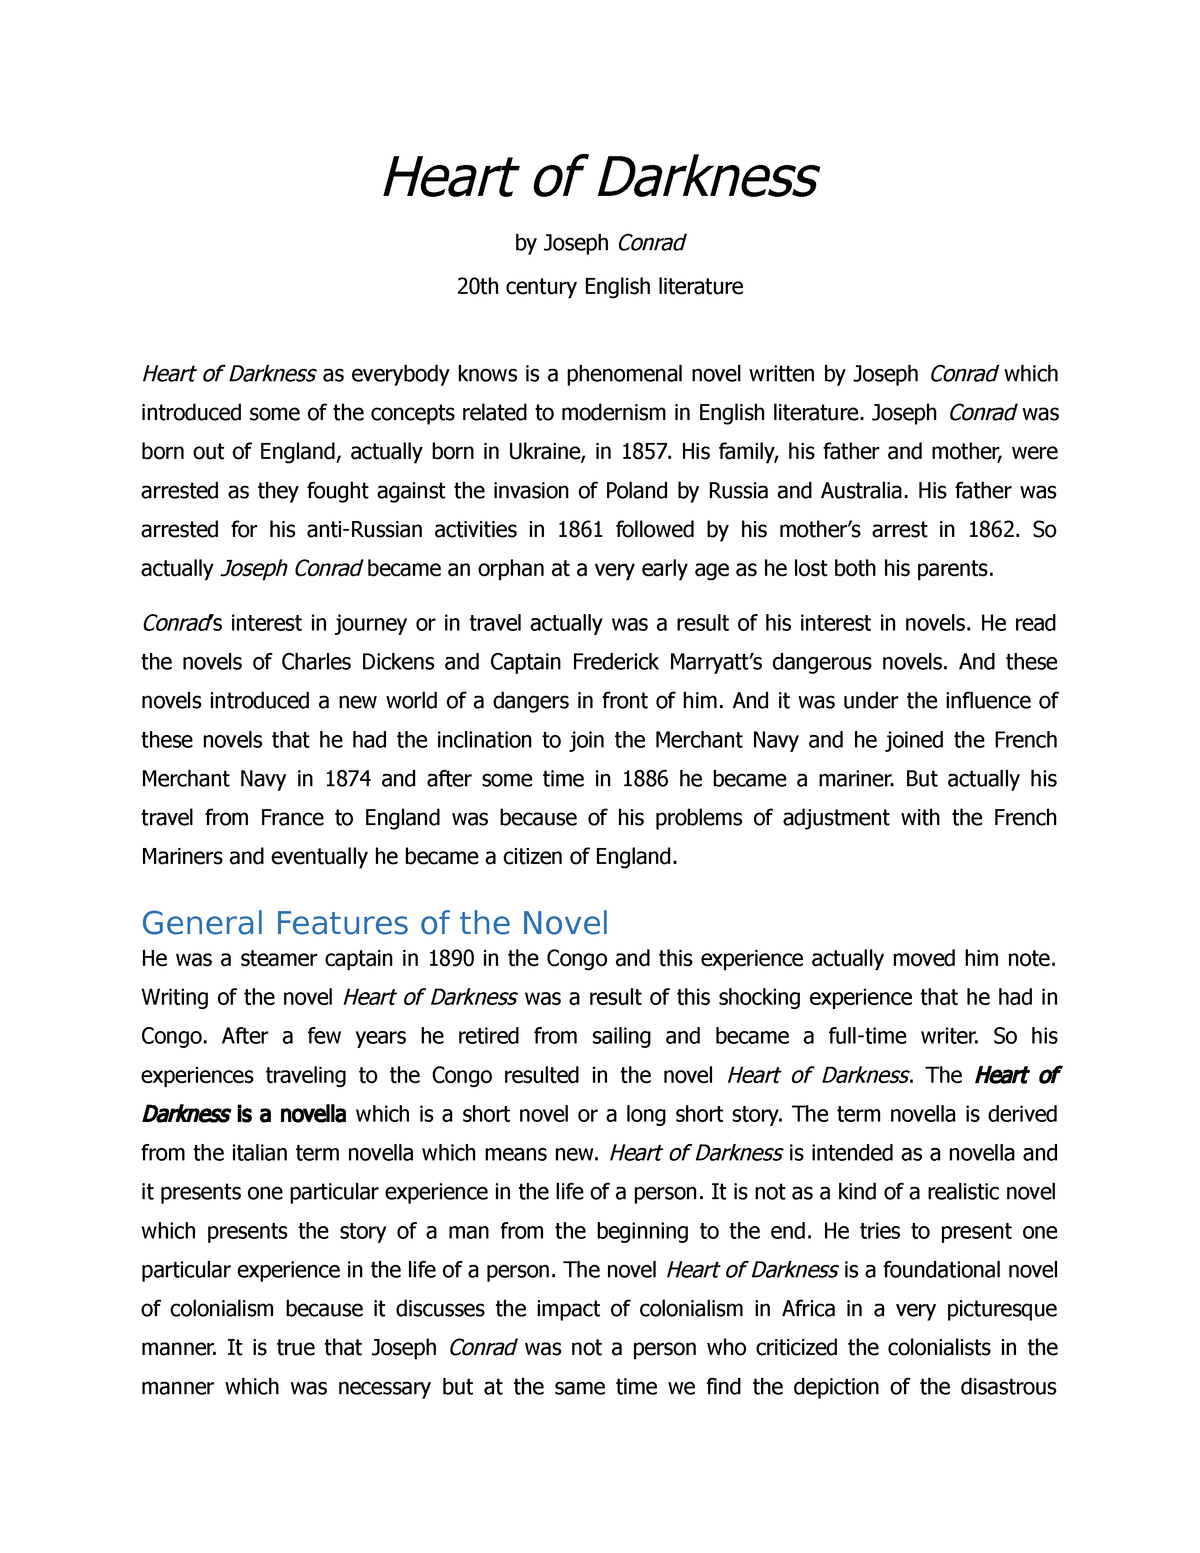 achebe essay on heart of darkness